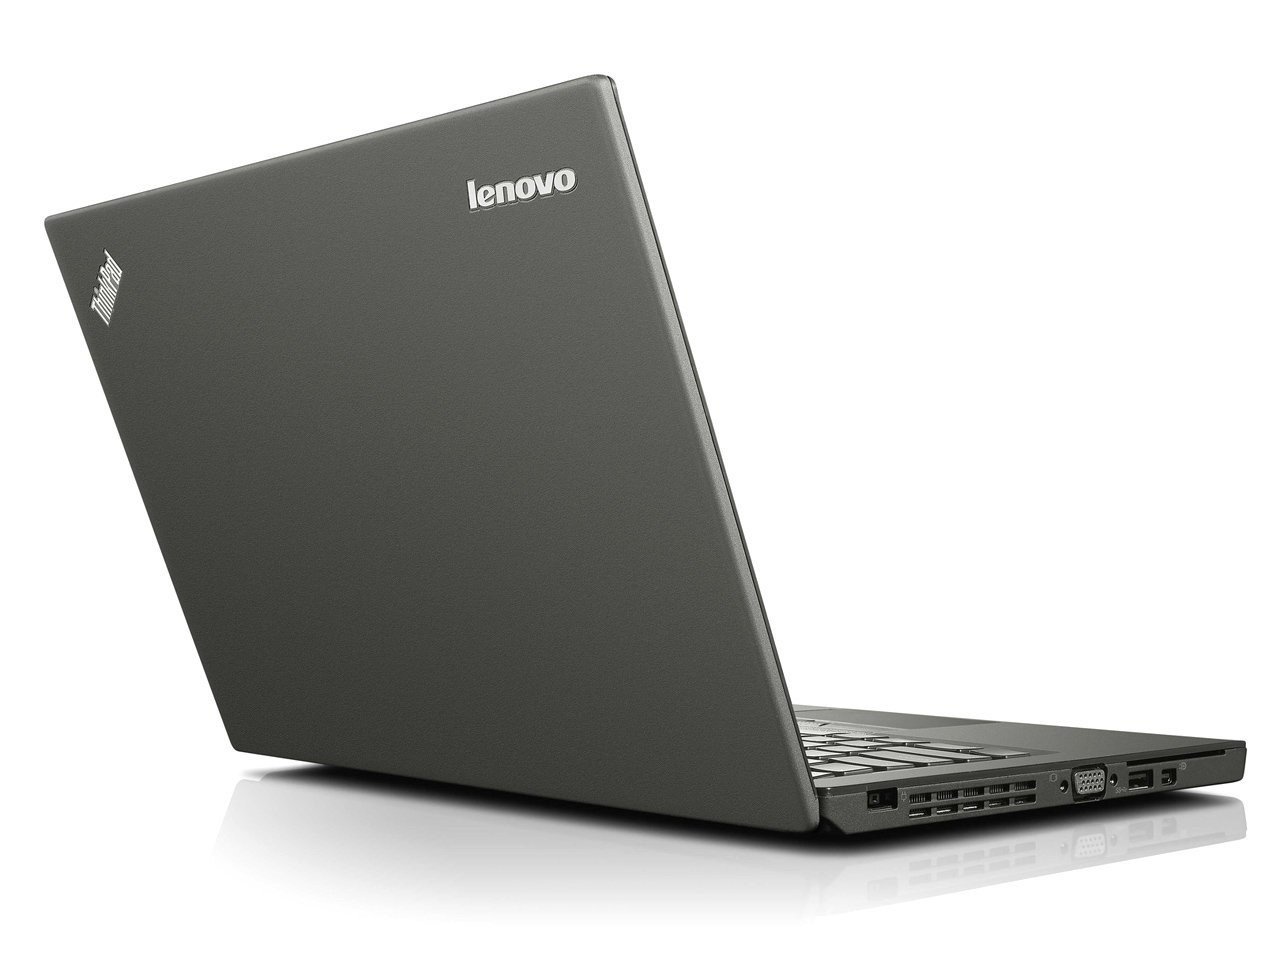 Lenovo ThinkPad X240 12.5 Laptop Computer Intel Core i7 4th Gen 8GB Ram  256GB SSD Windows 10 Pro WiFi